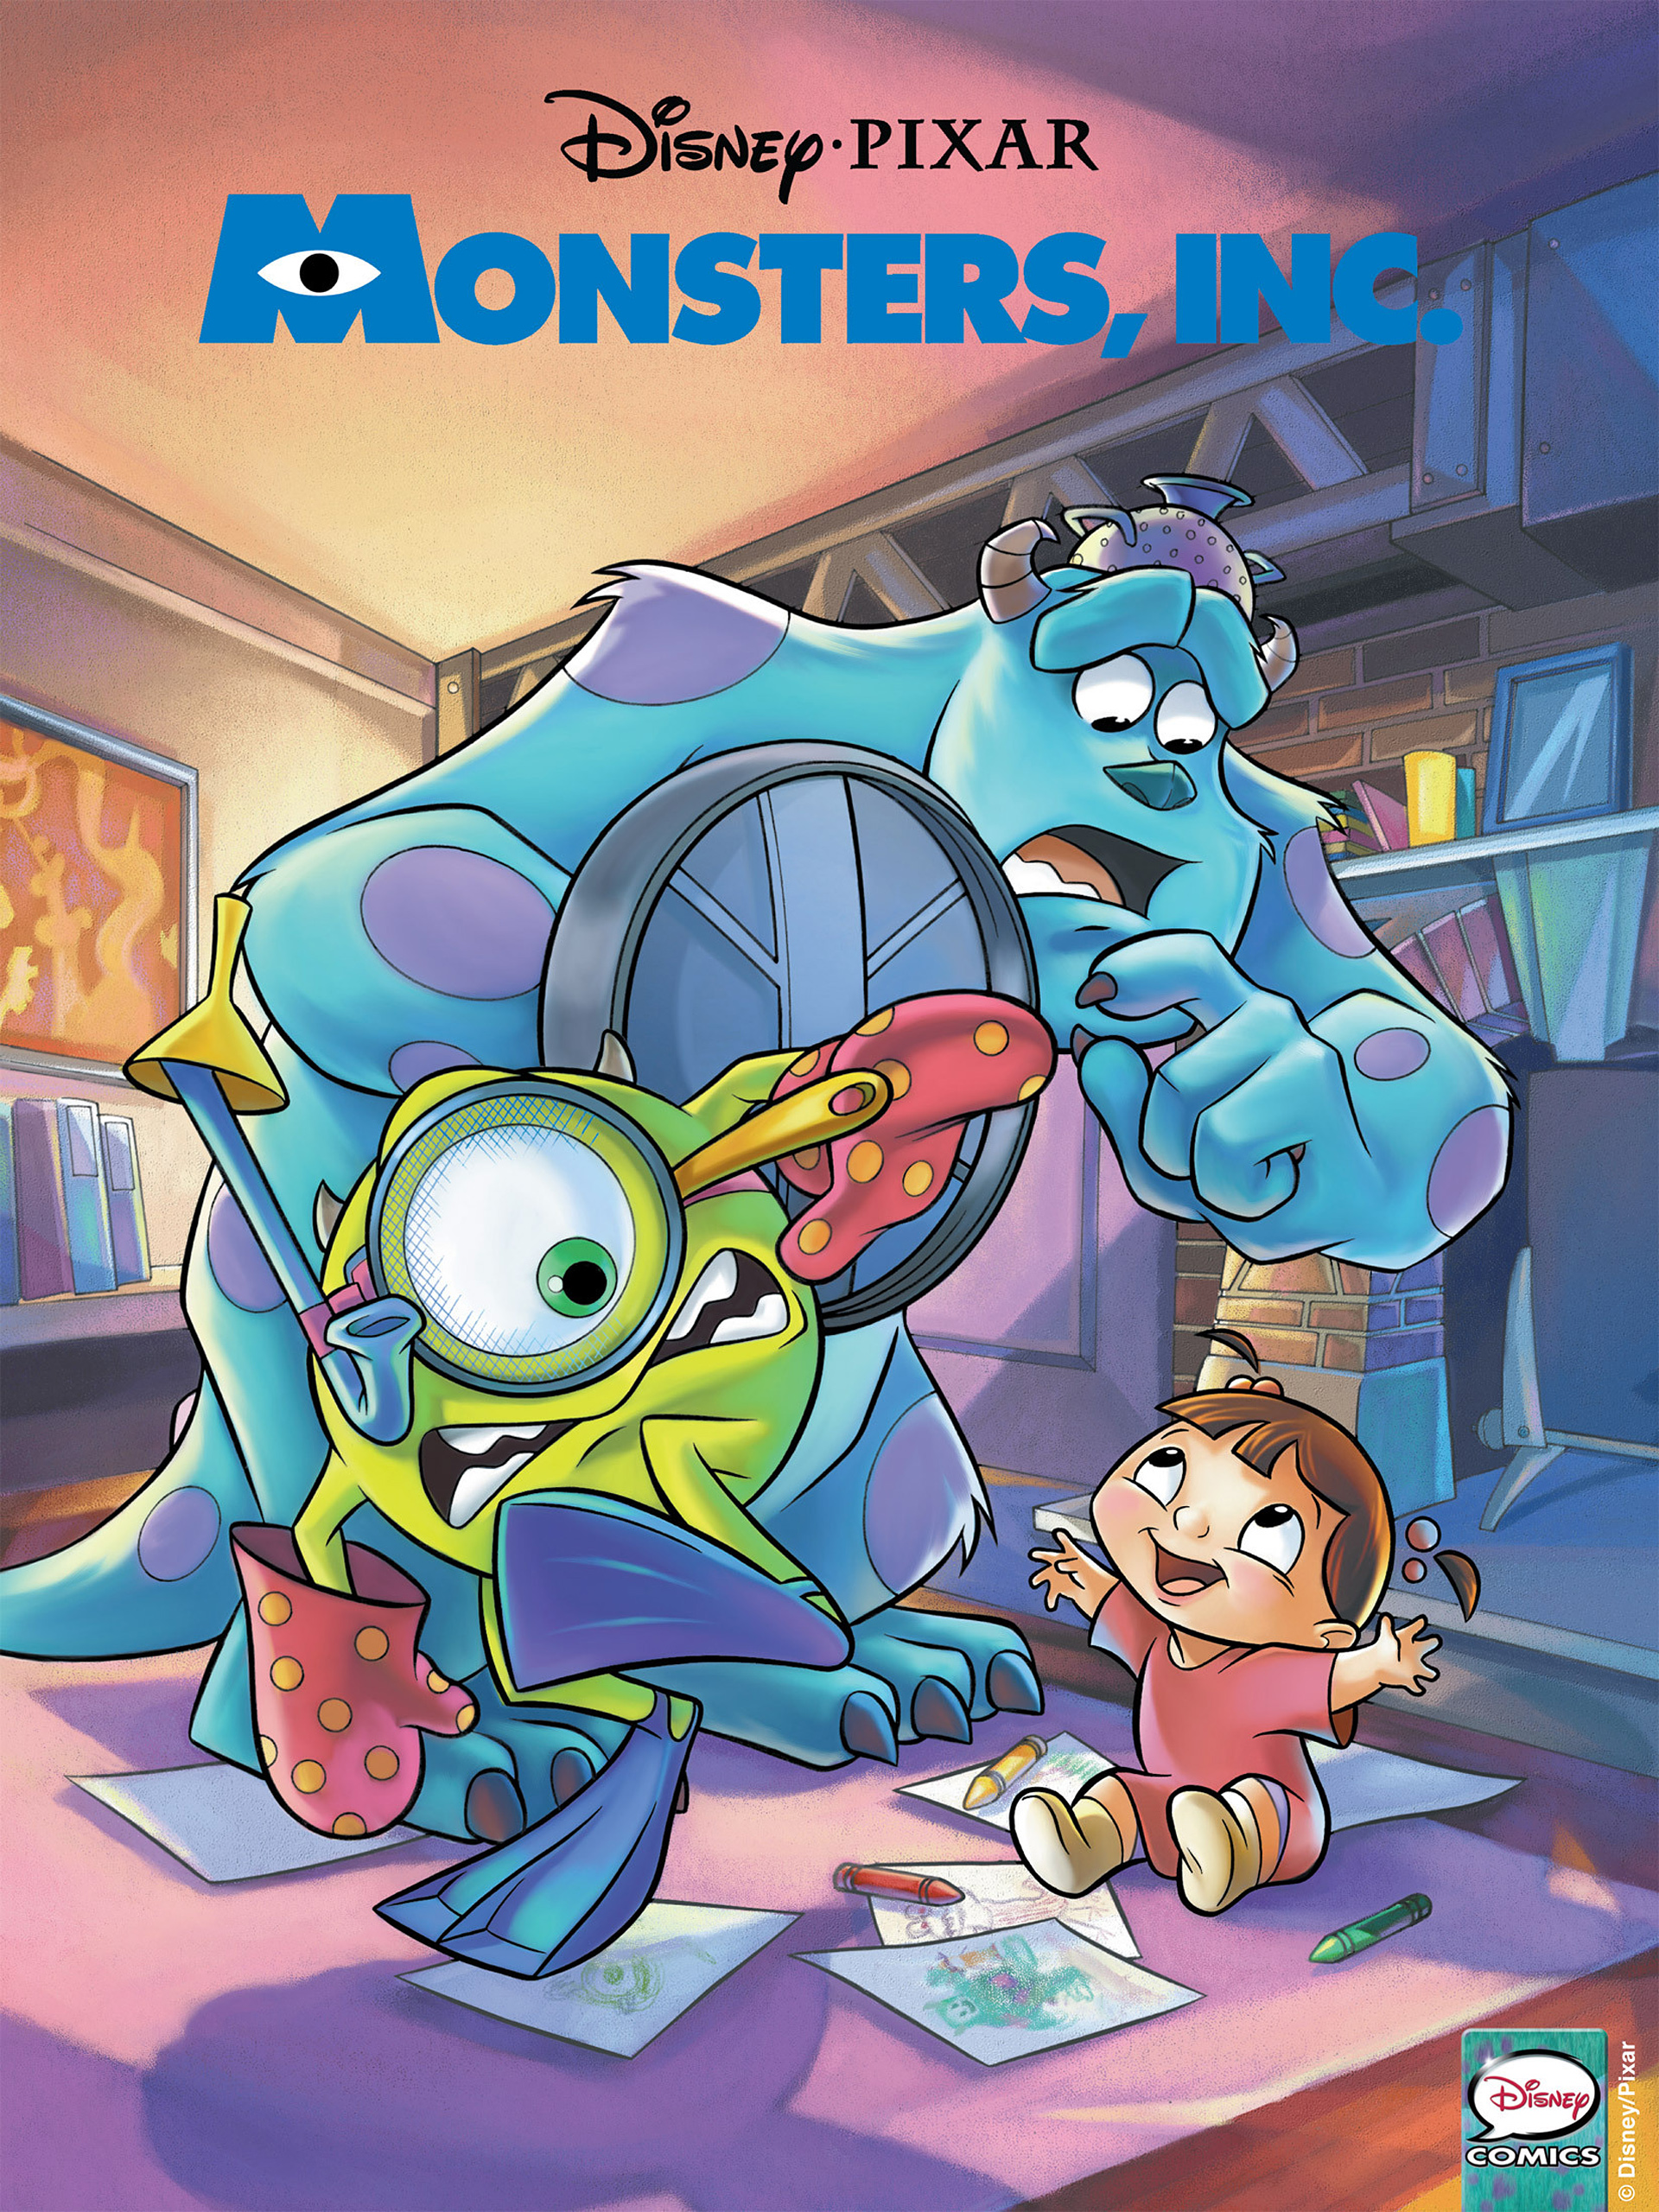 Monsters Inc Full | Read Monsters Inc Full comic online in high quality.  Read Full Comic online for free - Read comics online in high quality  .|viewcomiconline.com